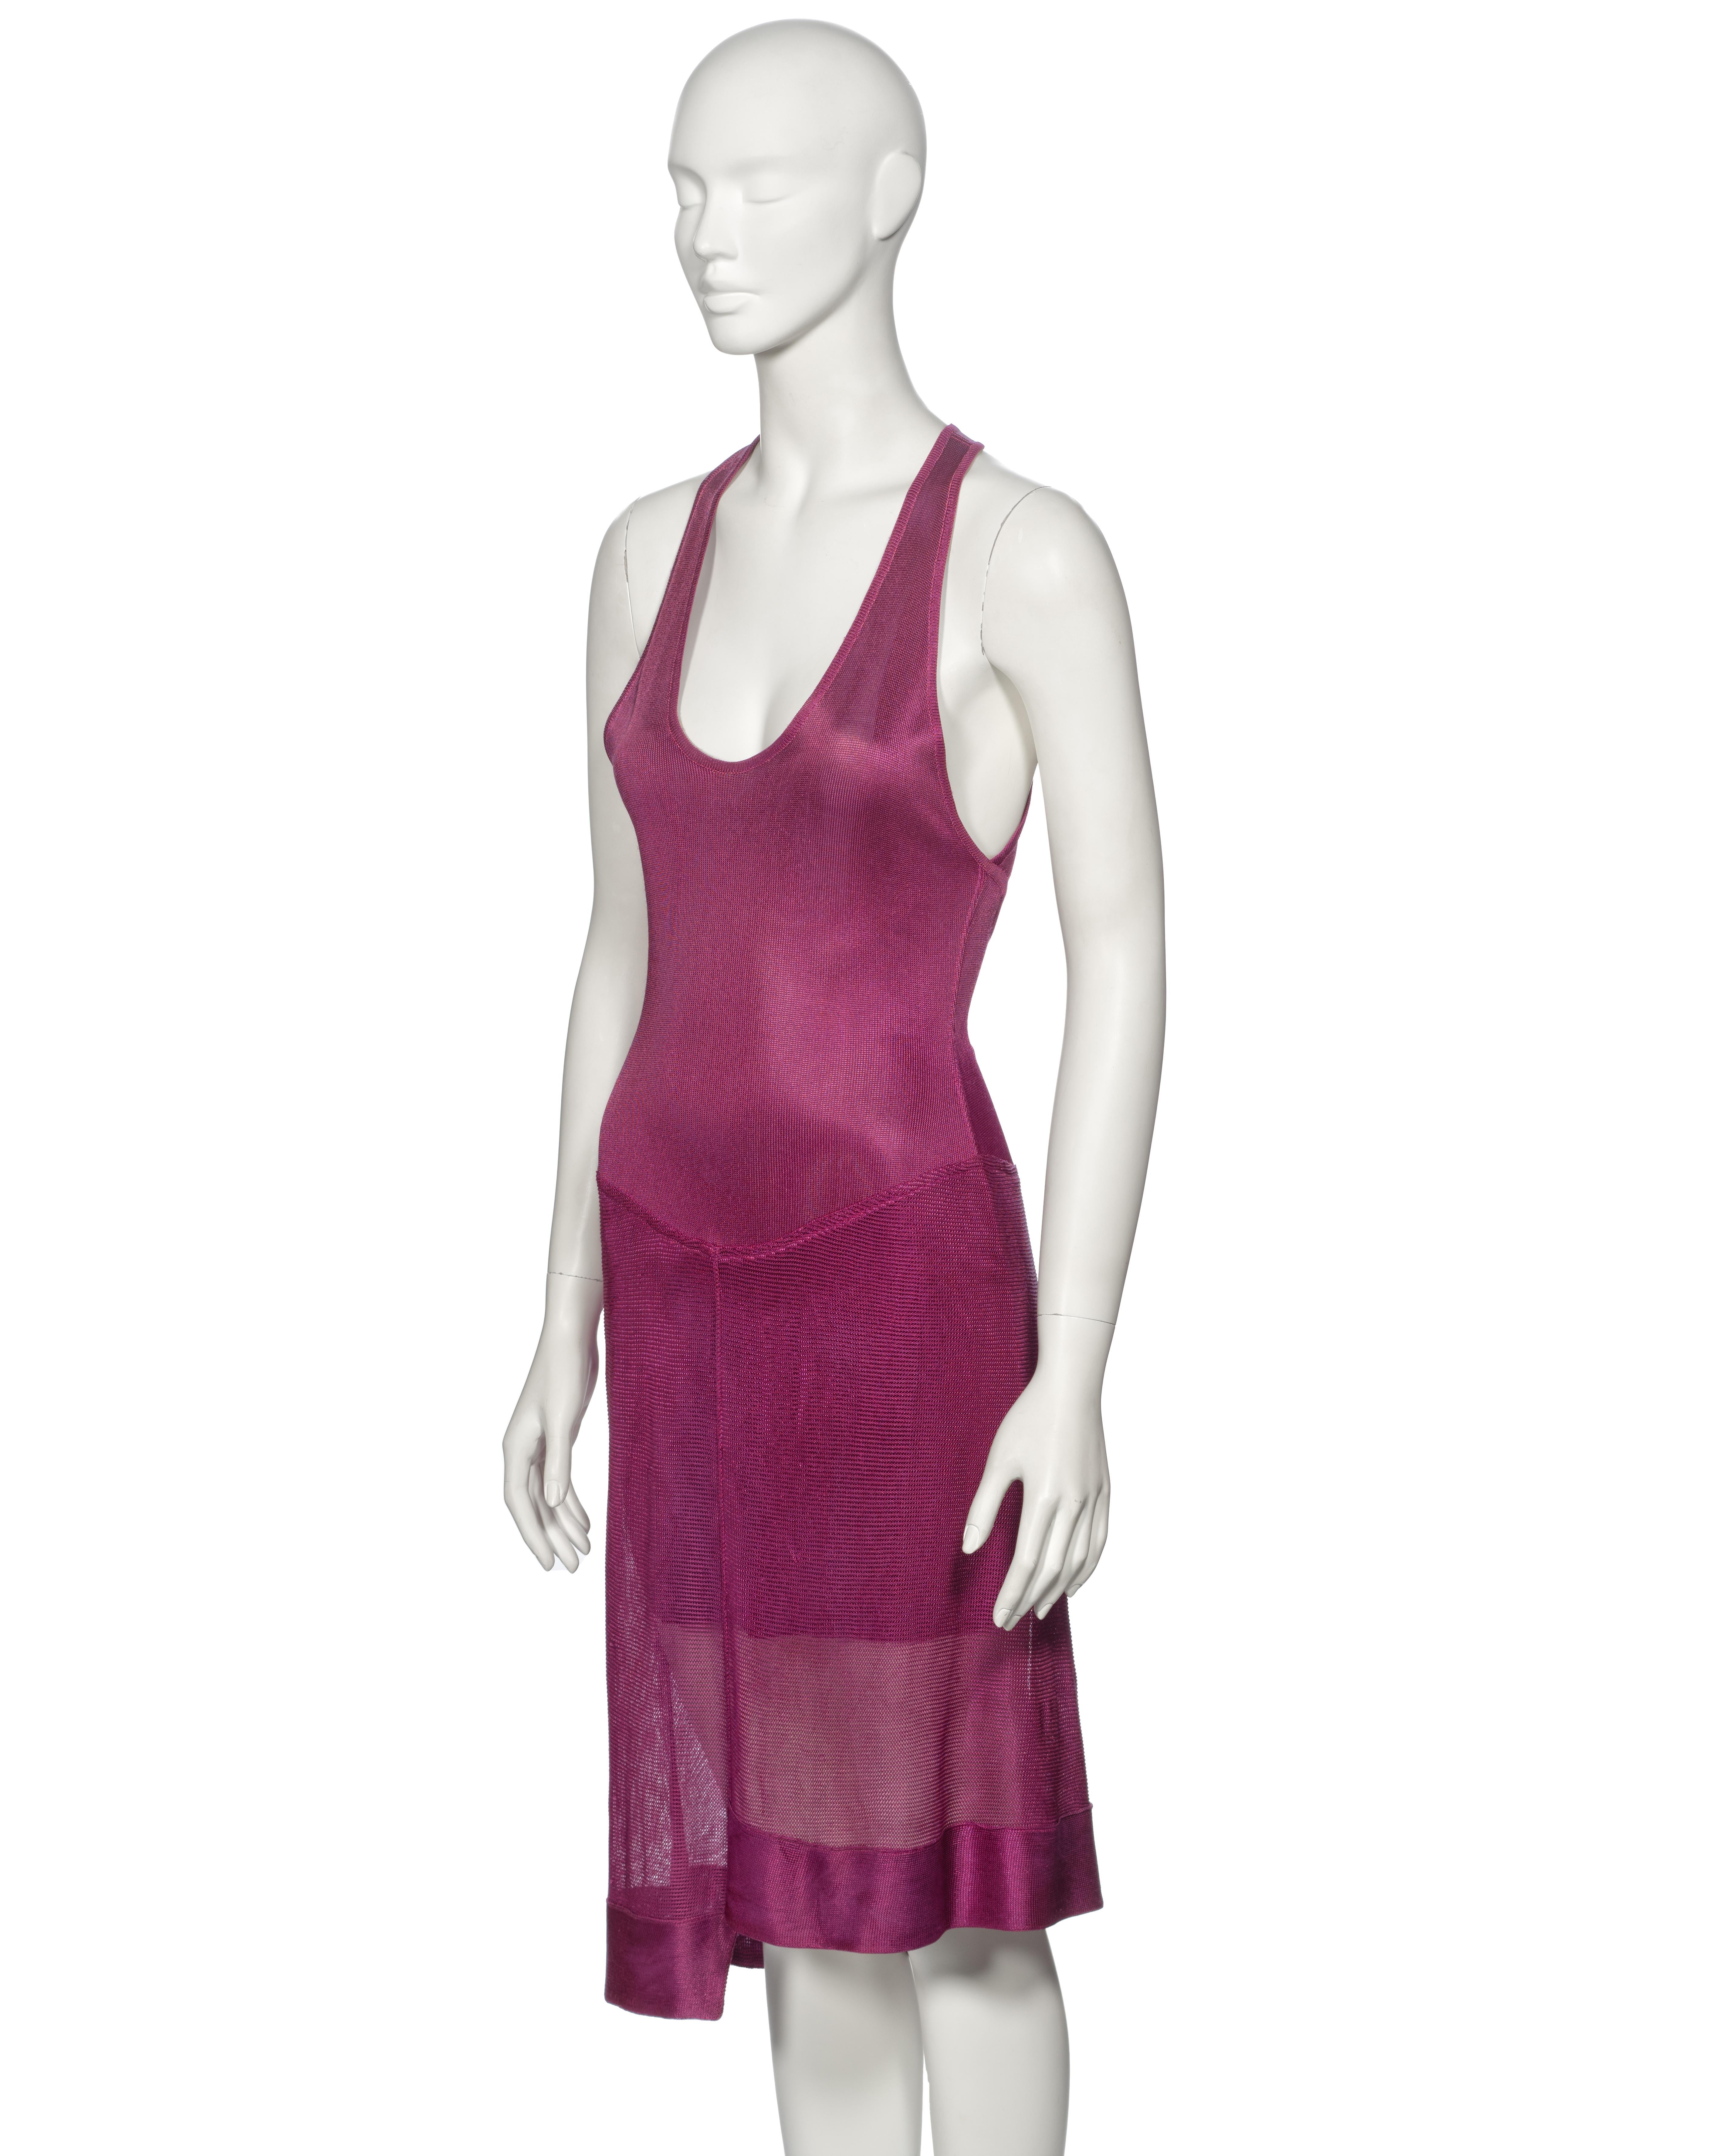 Azzedine Alaia Magenta Acetate Knit Cocktail Dress, ss 1986 For Sale 4